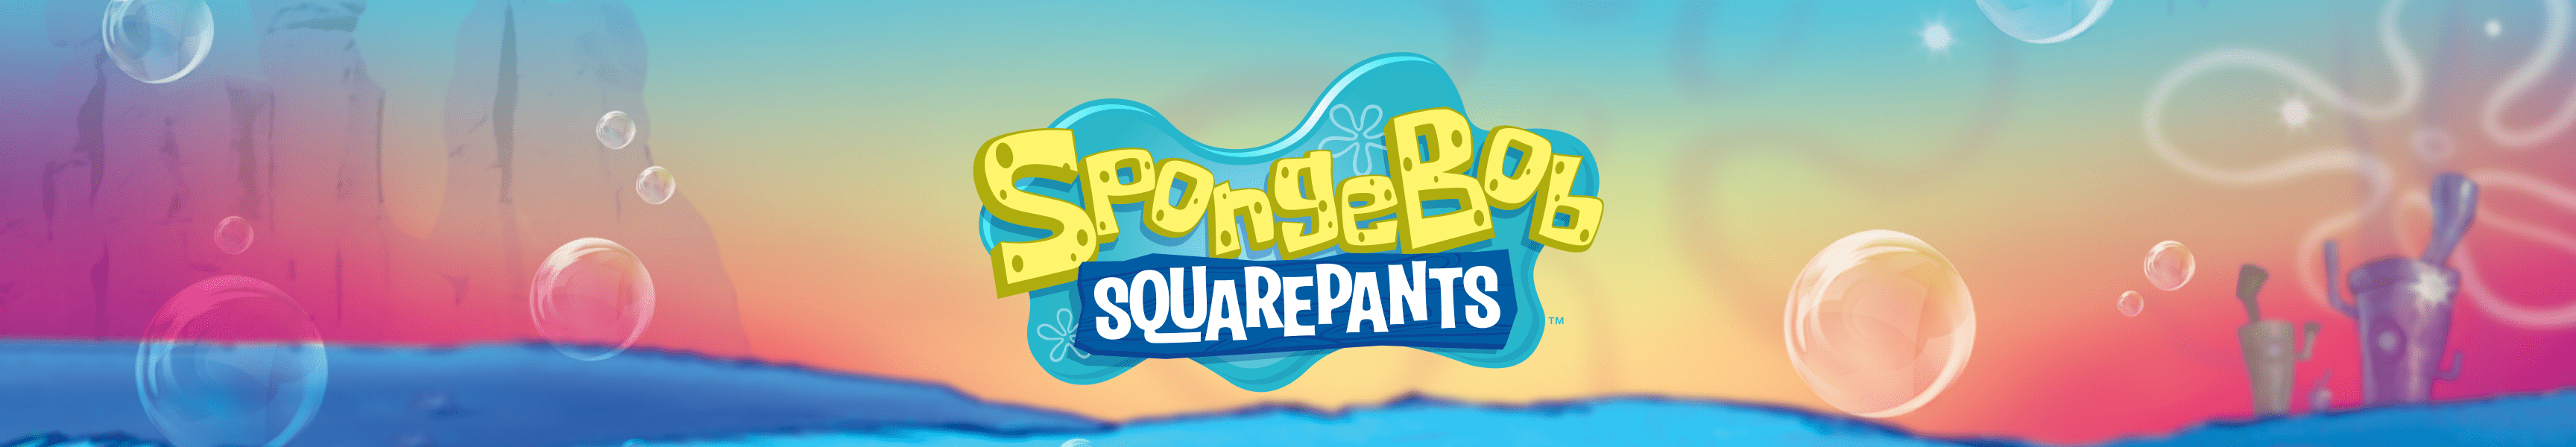 SpongeBob SquarePants $30 - $50